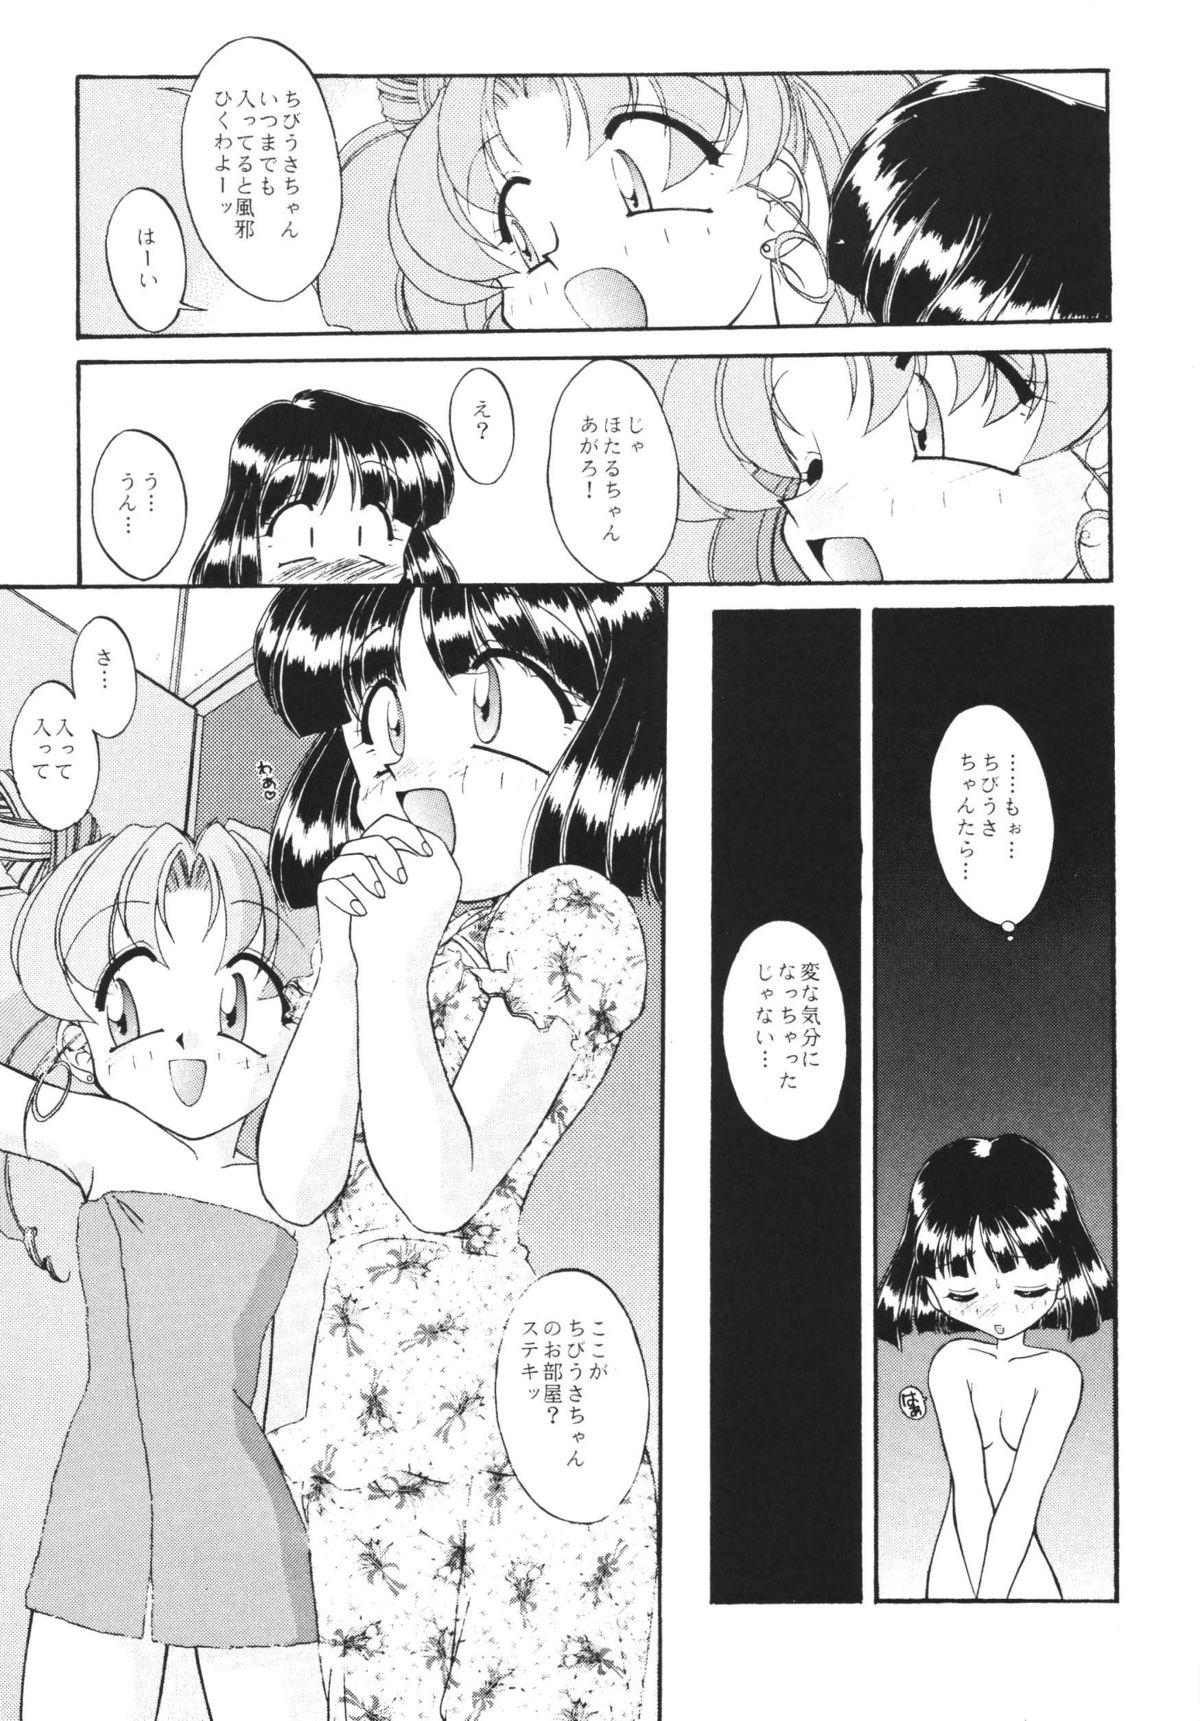 Little MOON MEMORIES Vol. 2 - Sailor moon Tetas - Page 7